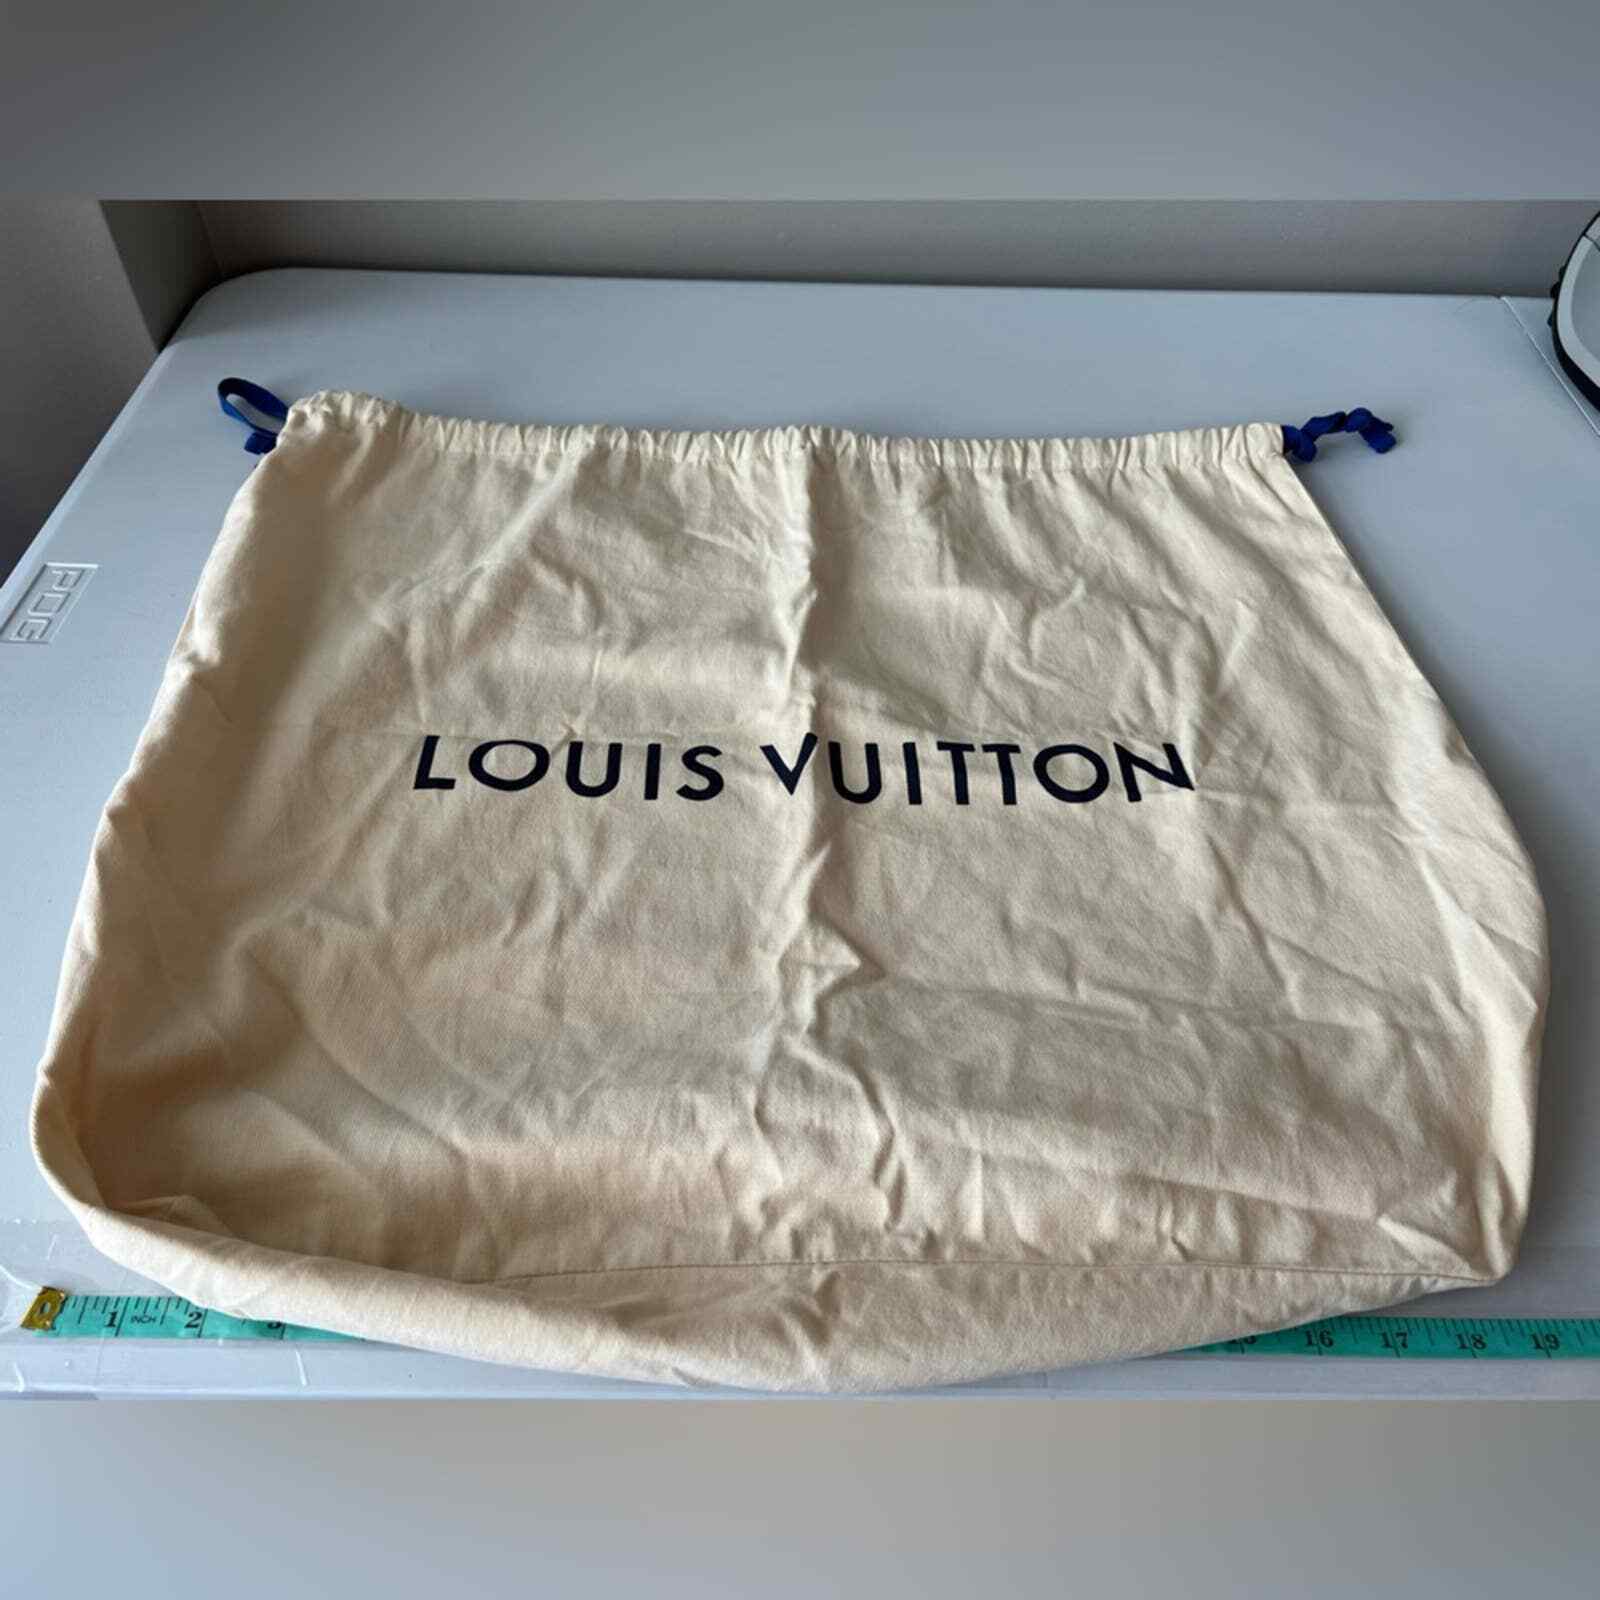 NEW LOUIS VUITTON DRAWSTING DUST BAG, 18 X 20 X 6.5